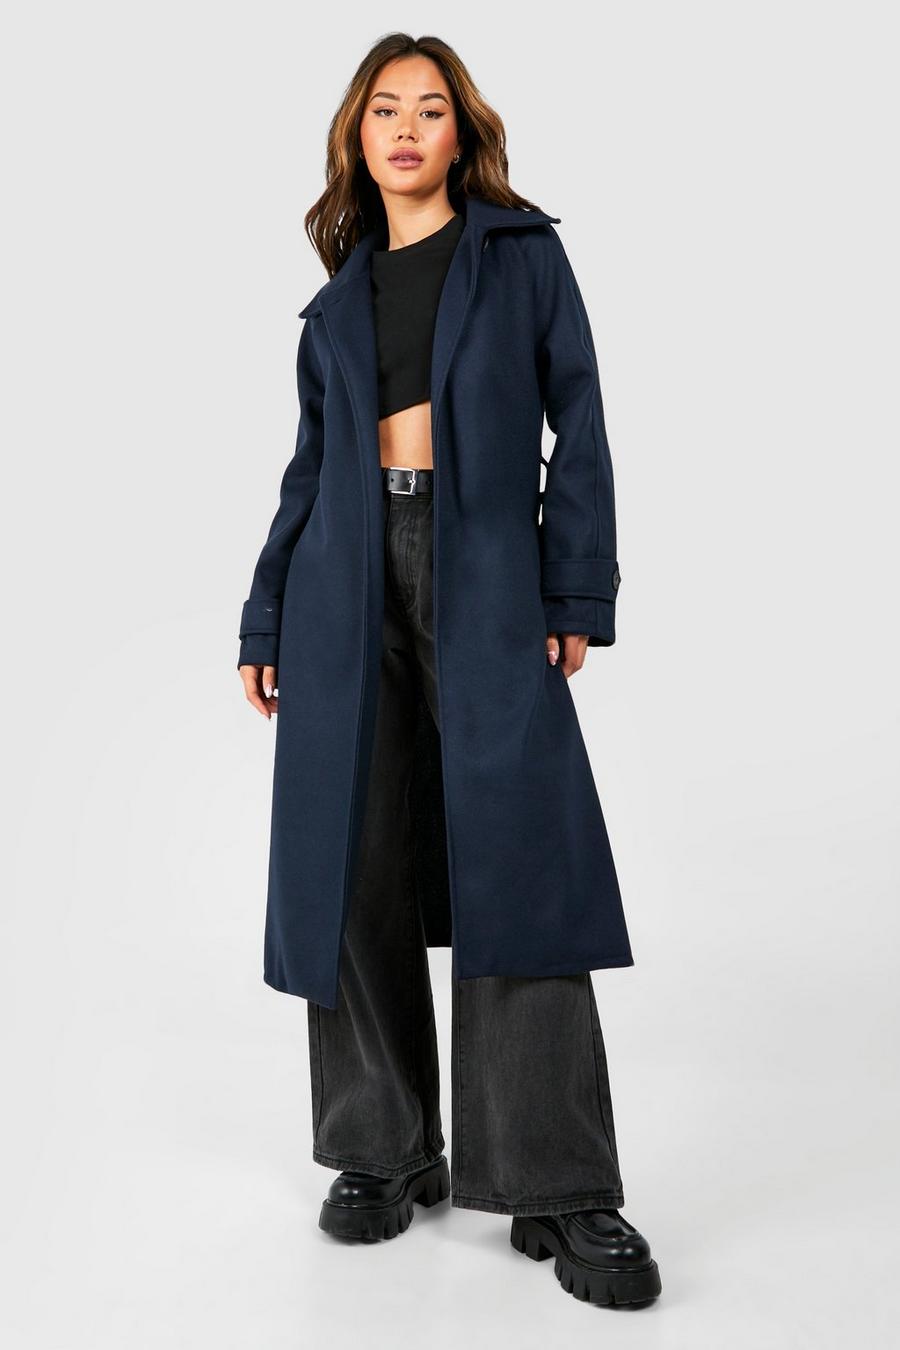 Cappotto effetto lana con colletto, cintura, Navy image number 1